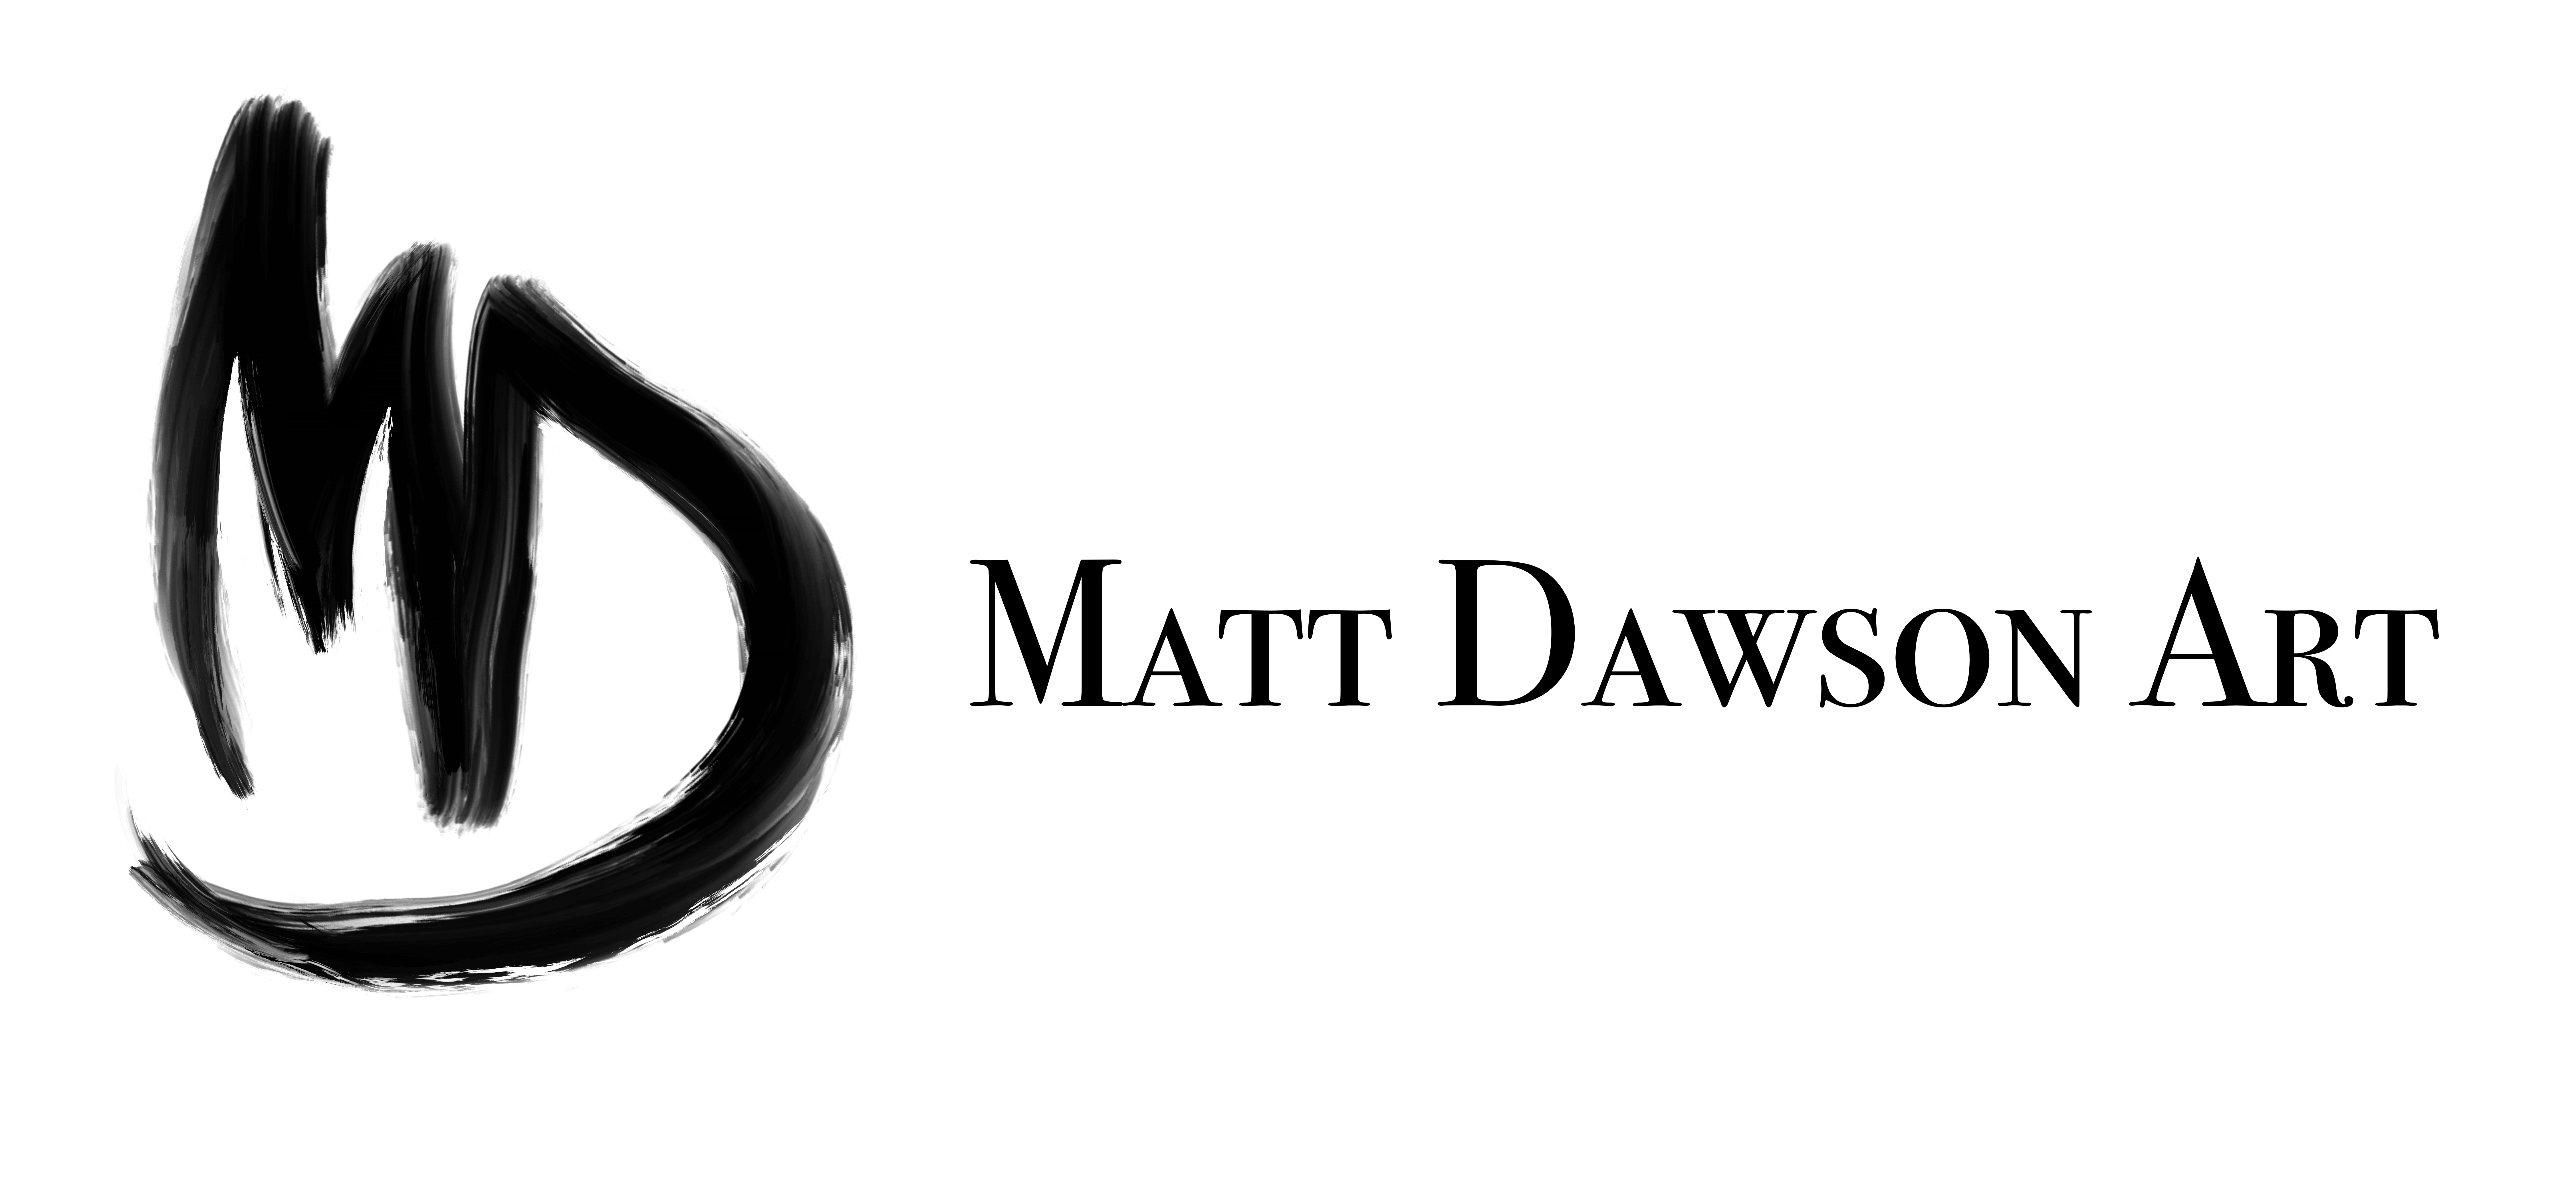 Matt Dawson Art